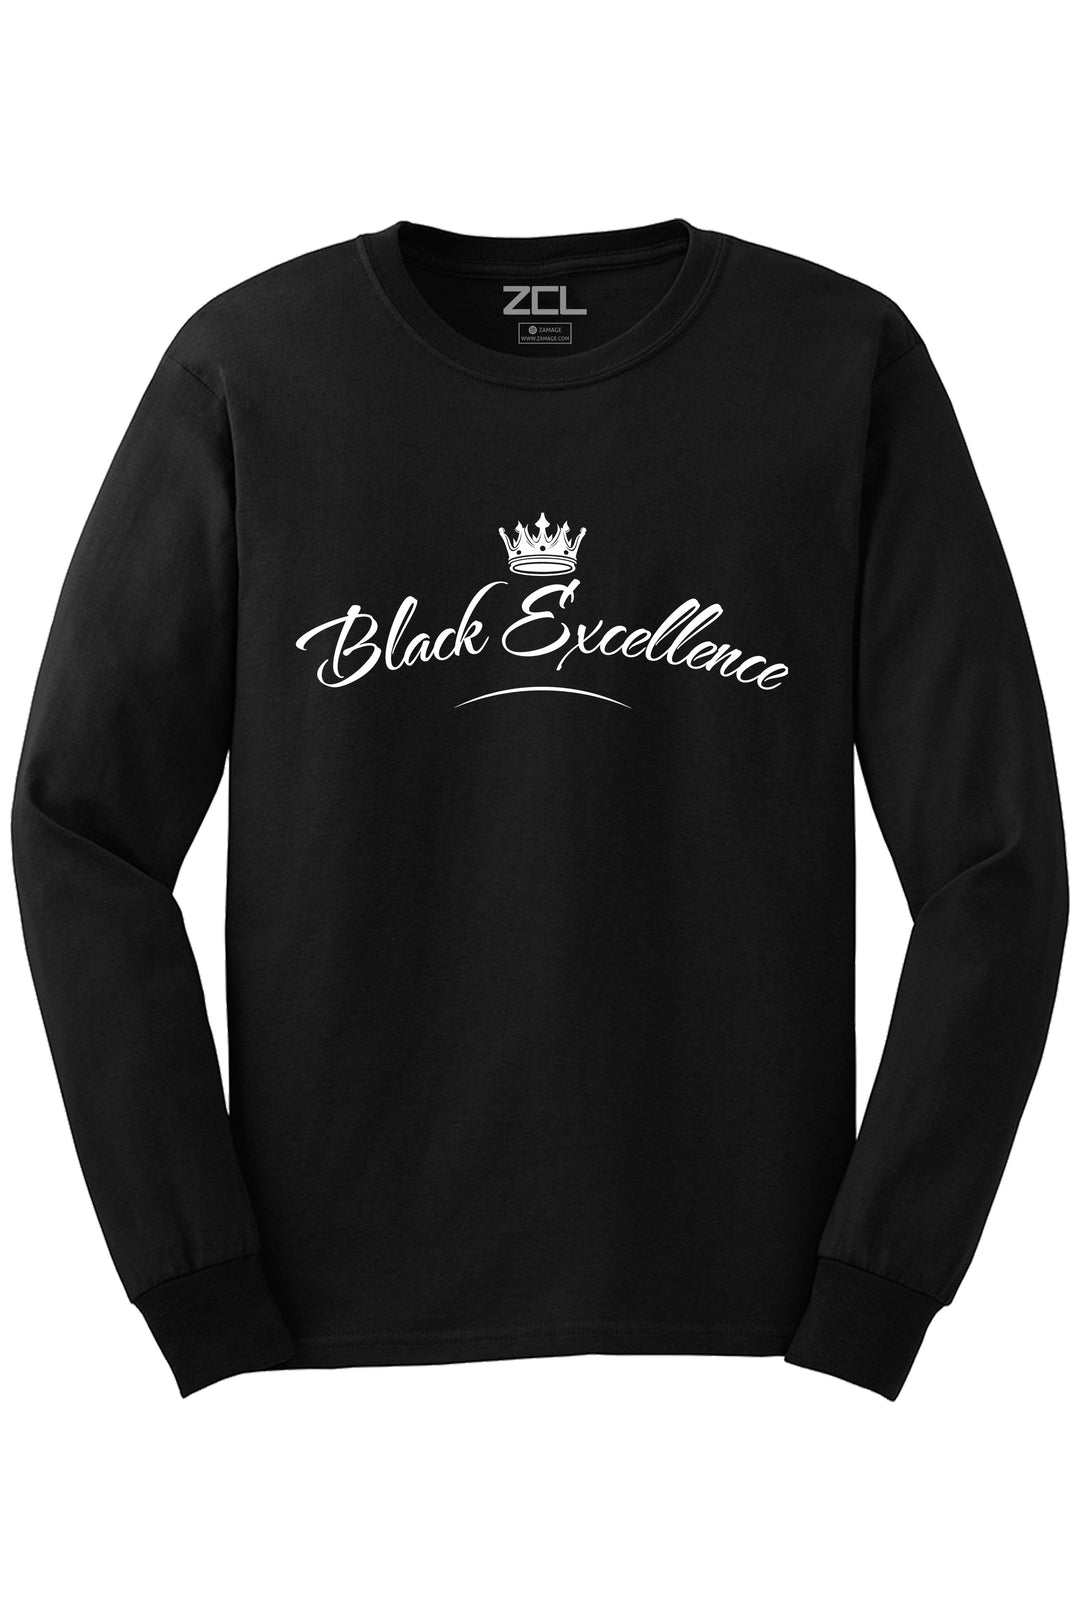 Black Excellence Long Sleeve Tee (White Logo) - Zamage